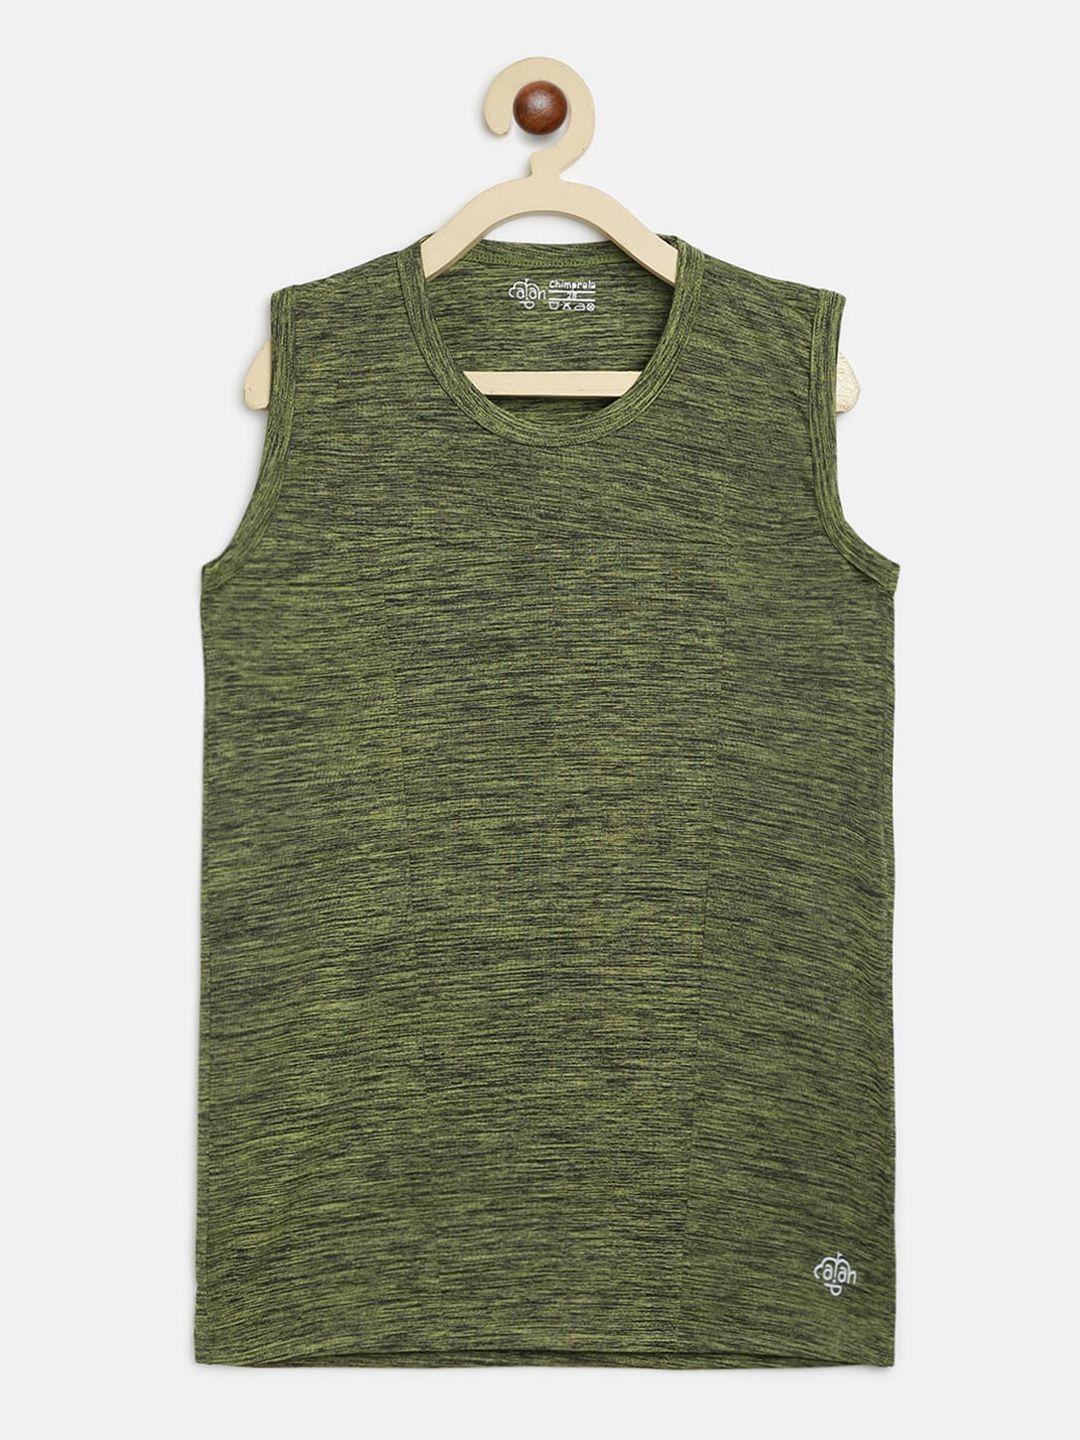 chimprala boys olive green solid round neck sleeveless vest sports t-shirt